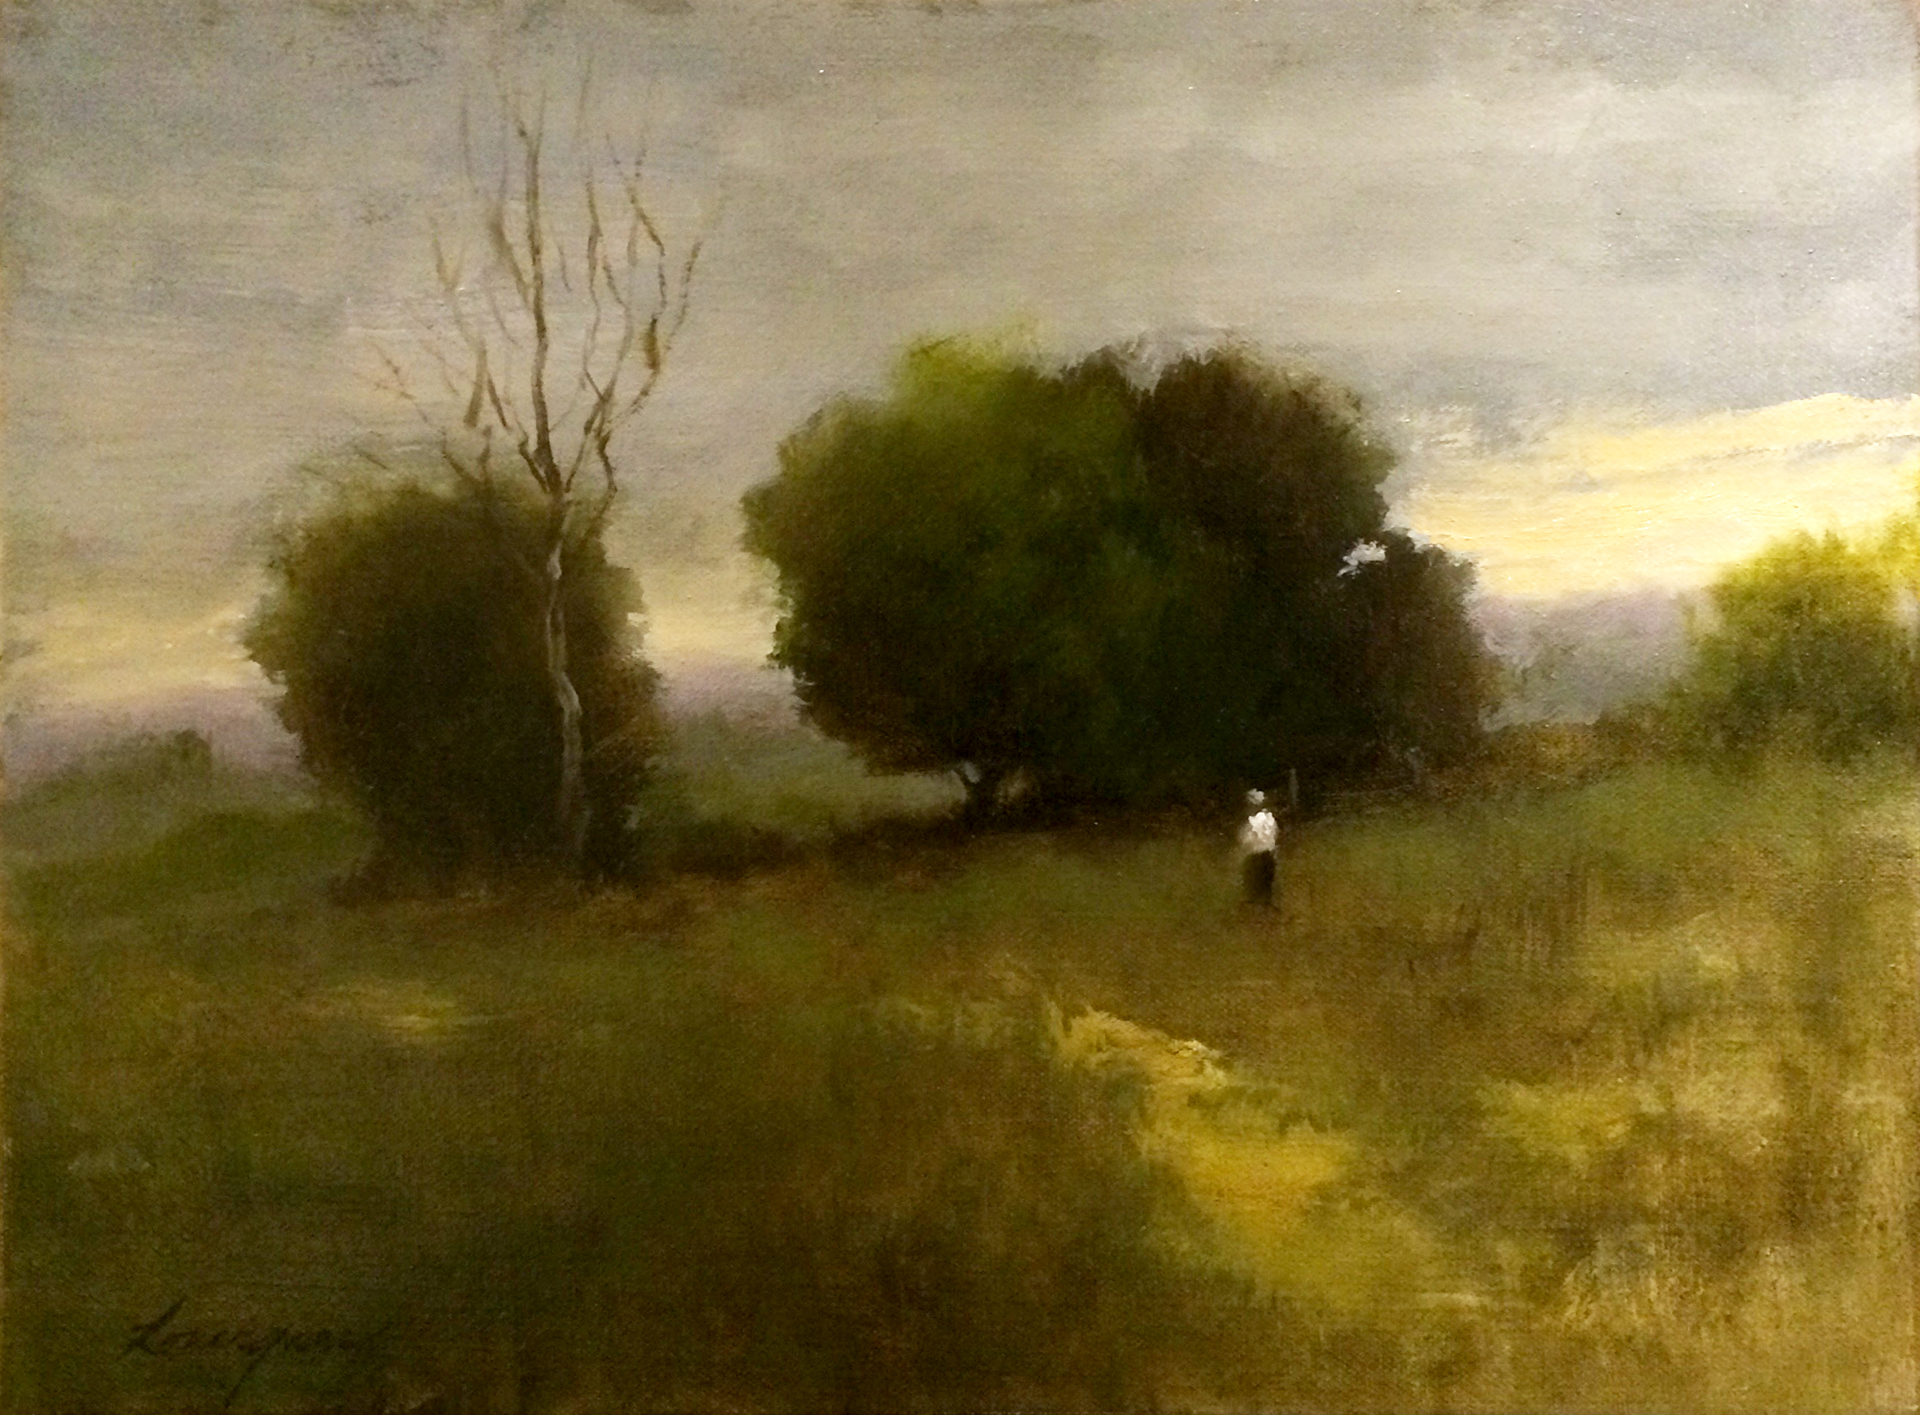 Solitude by John Lonergan